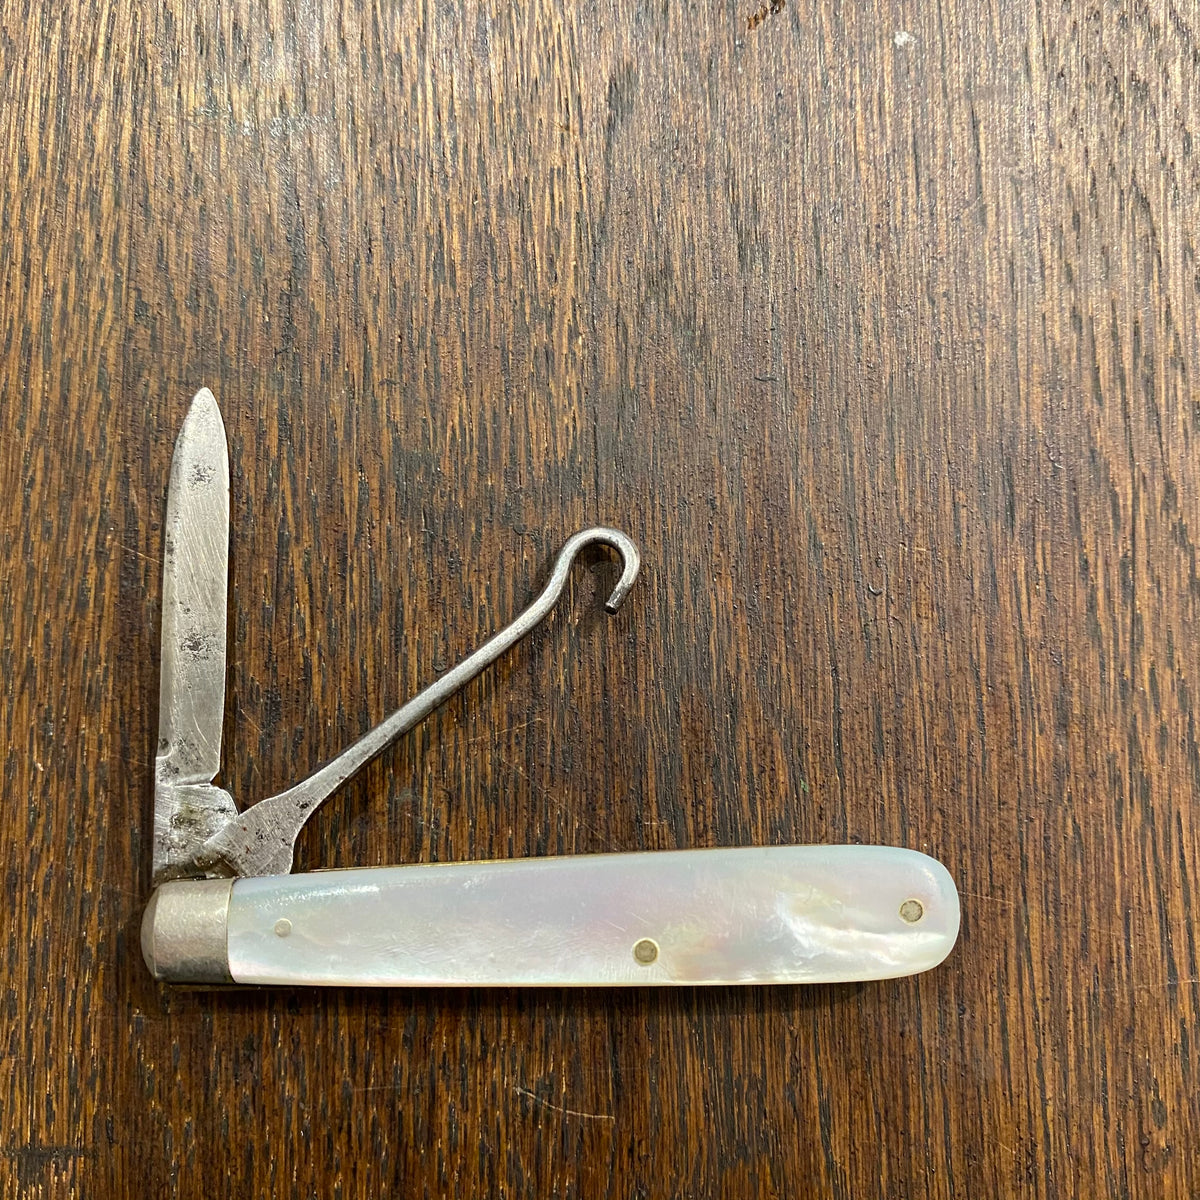 Hibbard Spencer & Bartlett 2 5/8" Pen Knife W Button Hook MOP 1855- 1960 (1920's or older?)